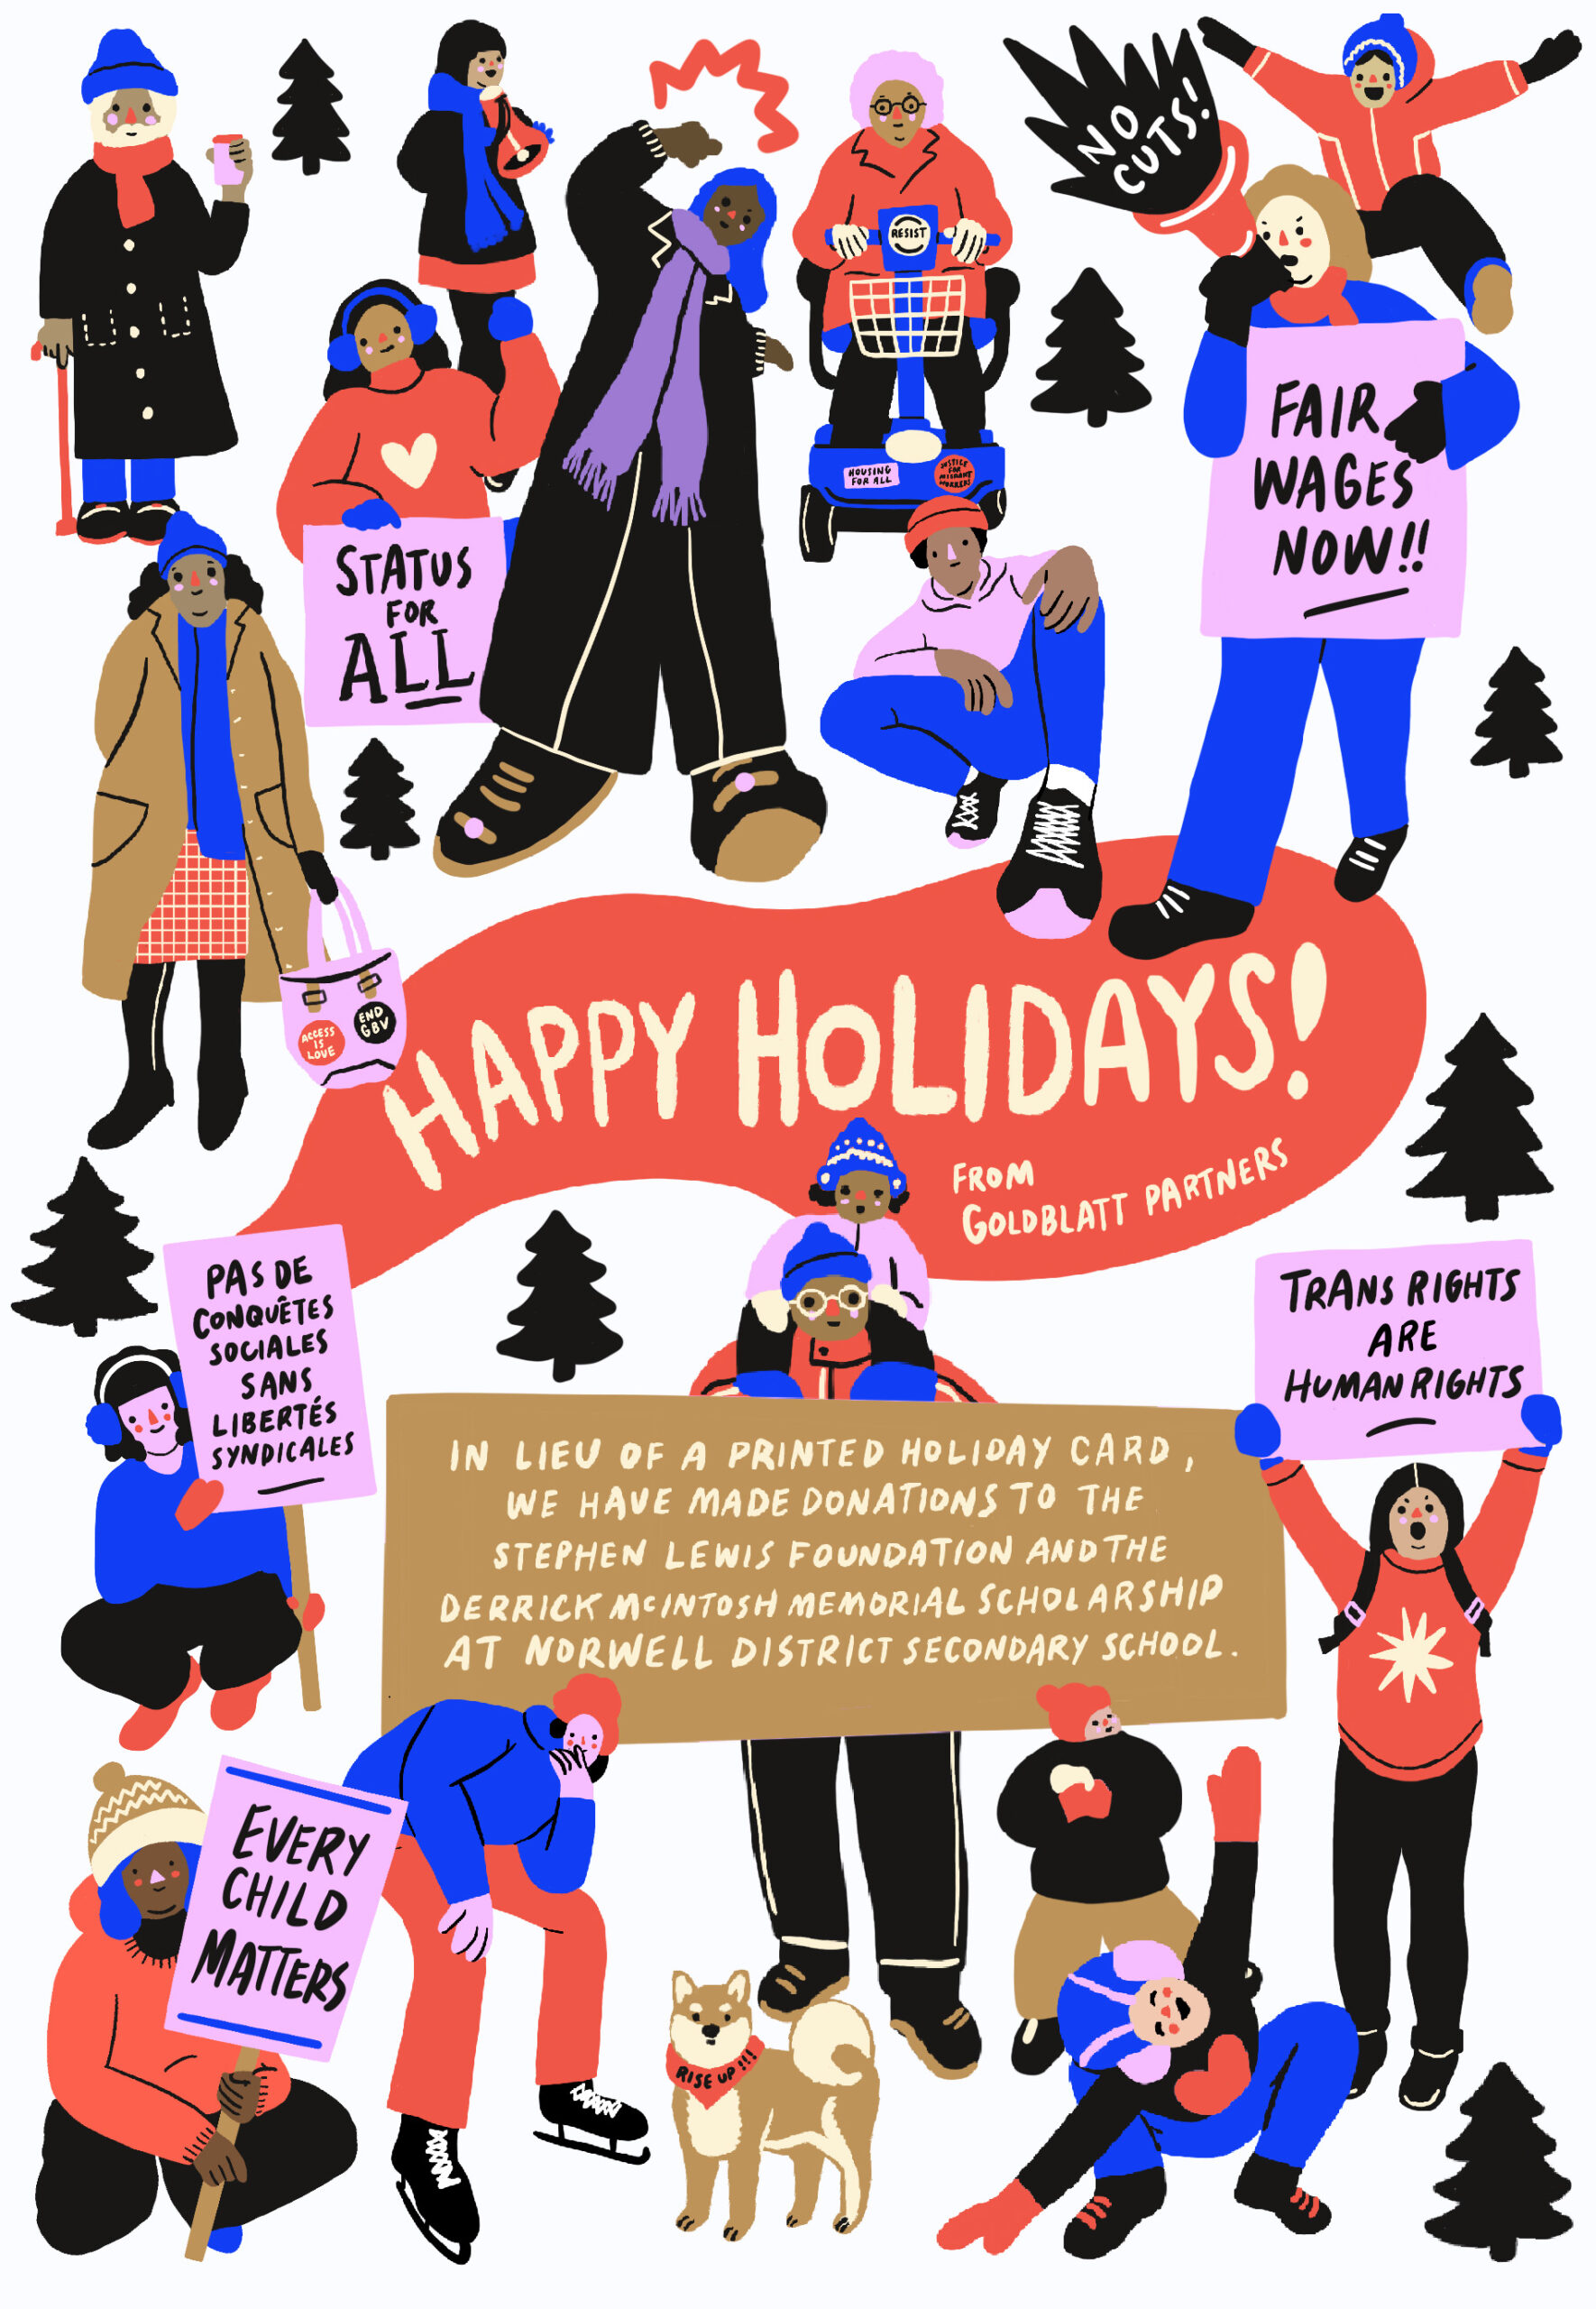 A colourful card wishing everyone Happy Holidays from Goldblatt Partners